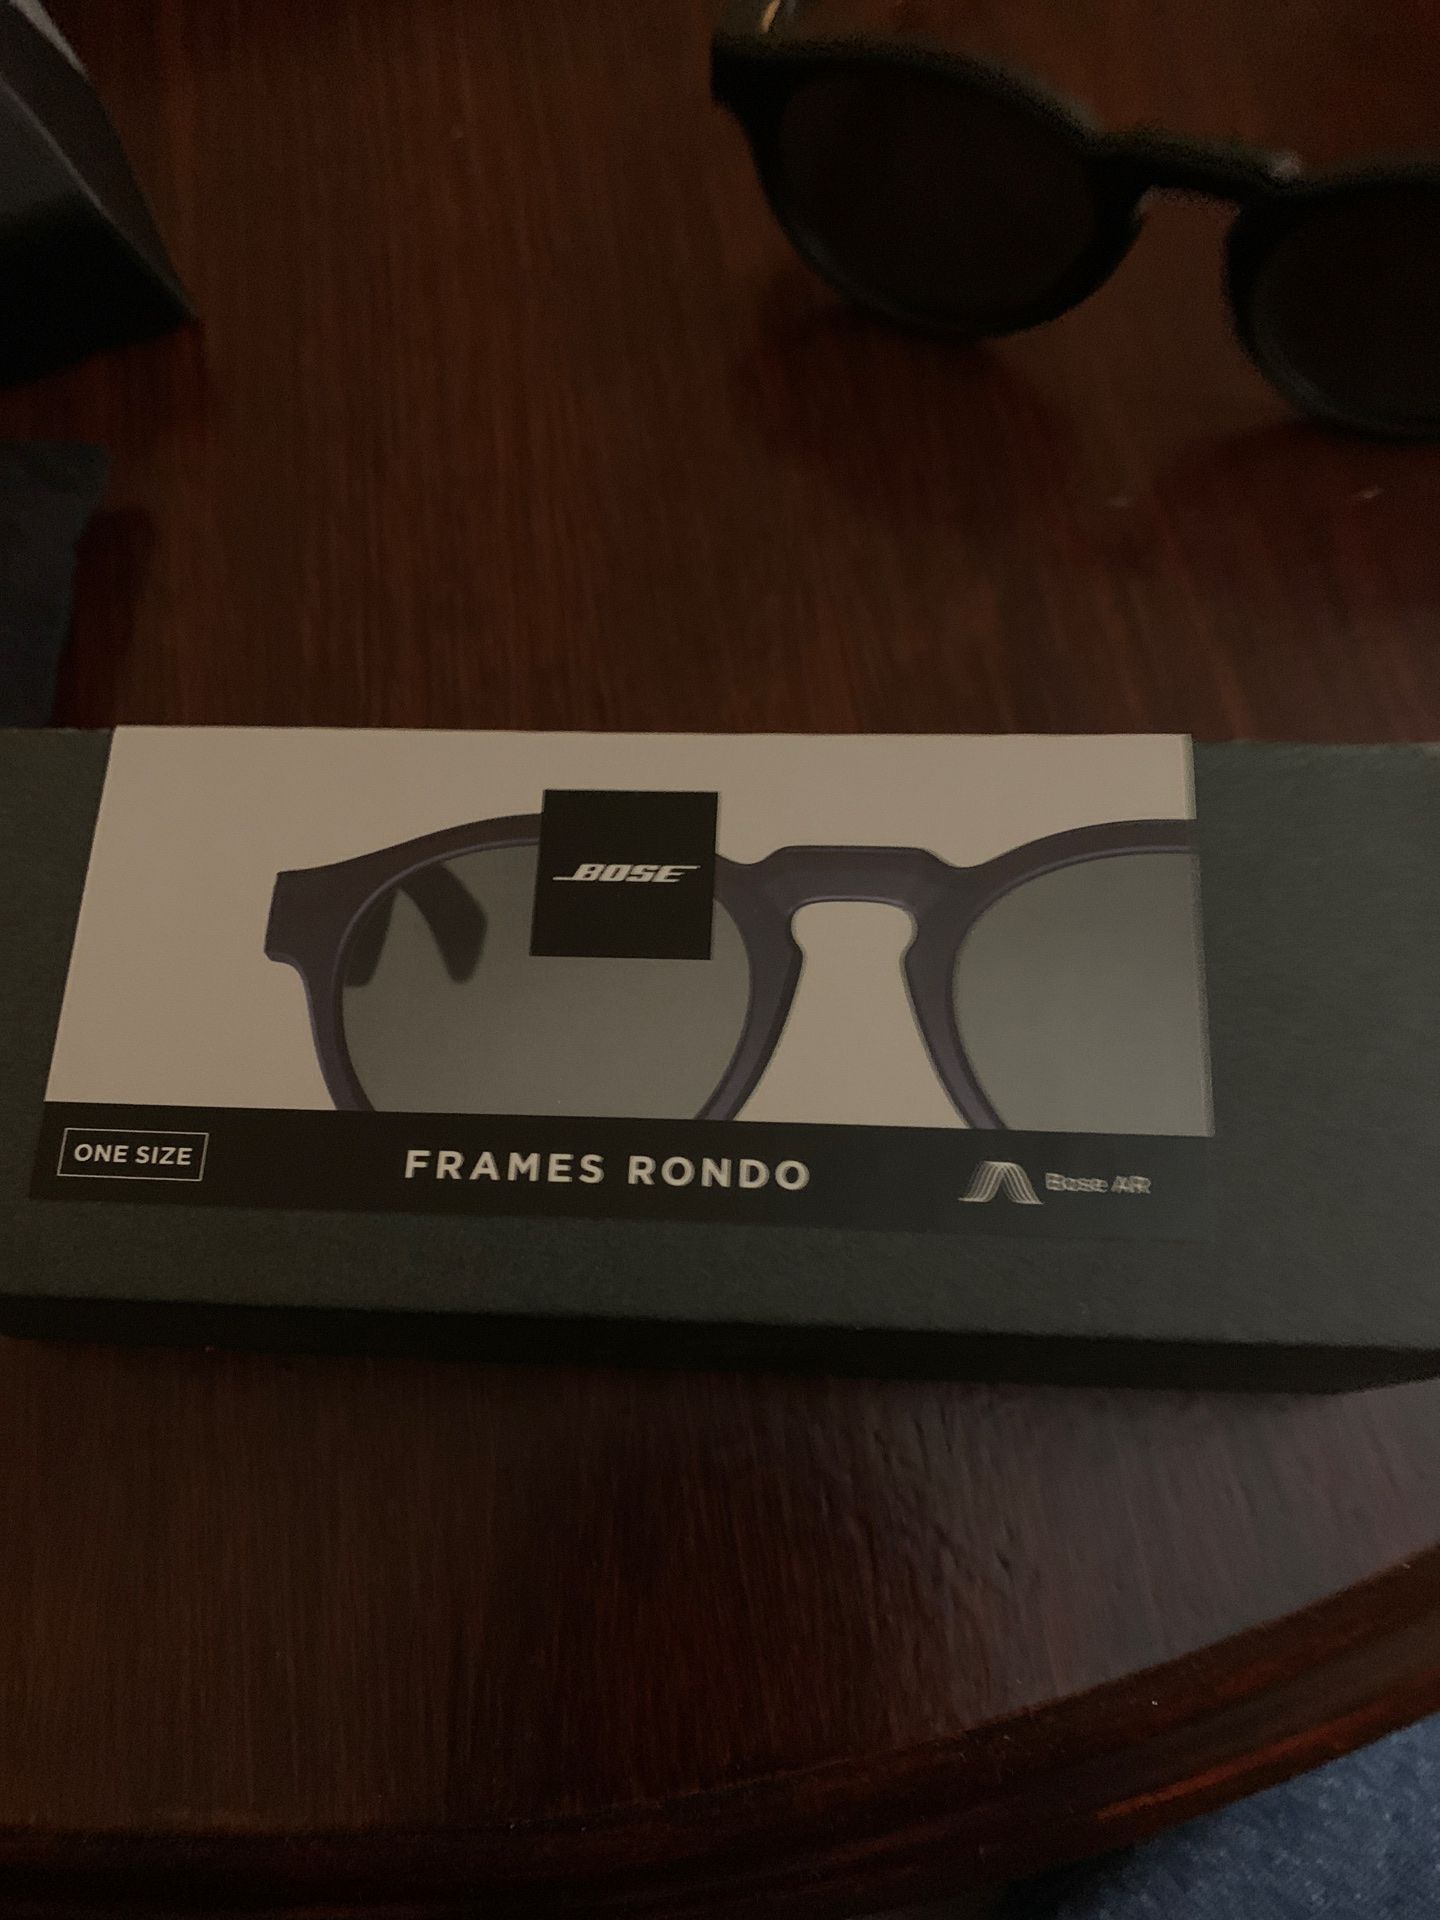 Bose frames